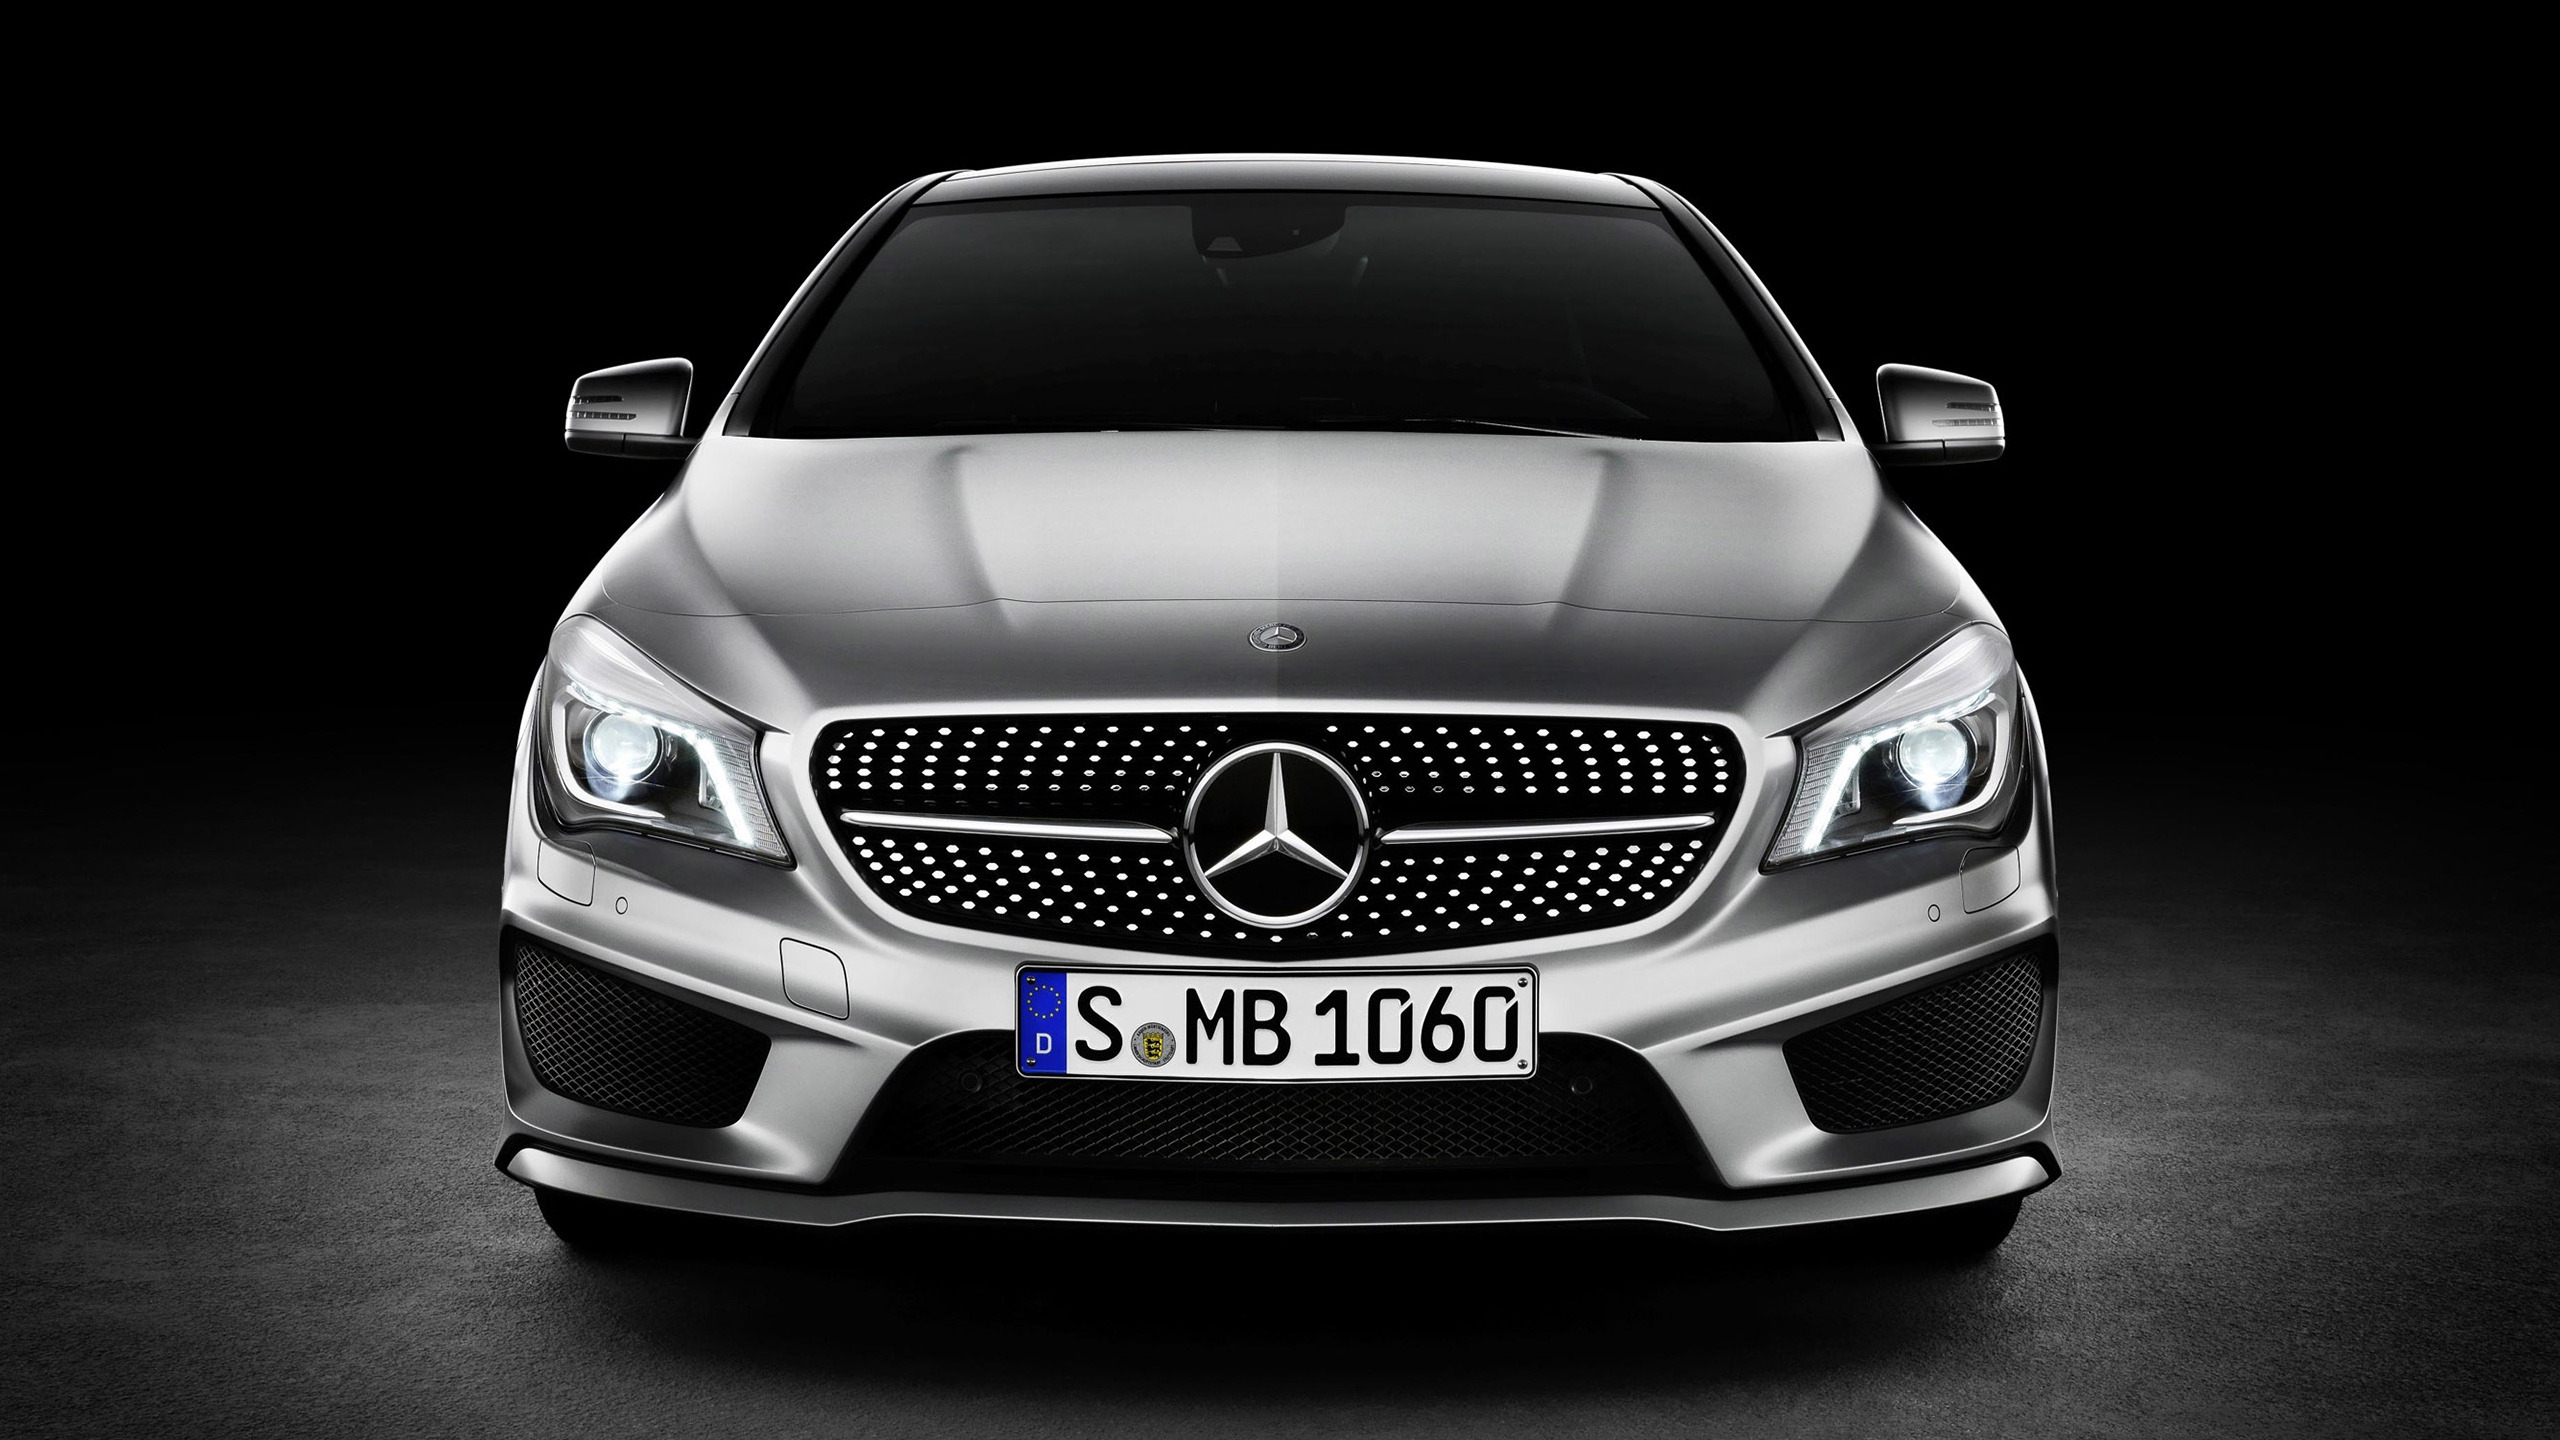 Mercedes Benz CLA Class Studio for 2560x1440 HDTV resolution